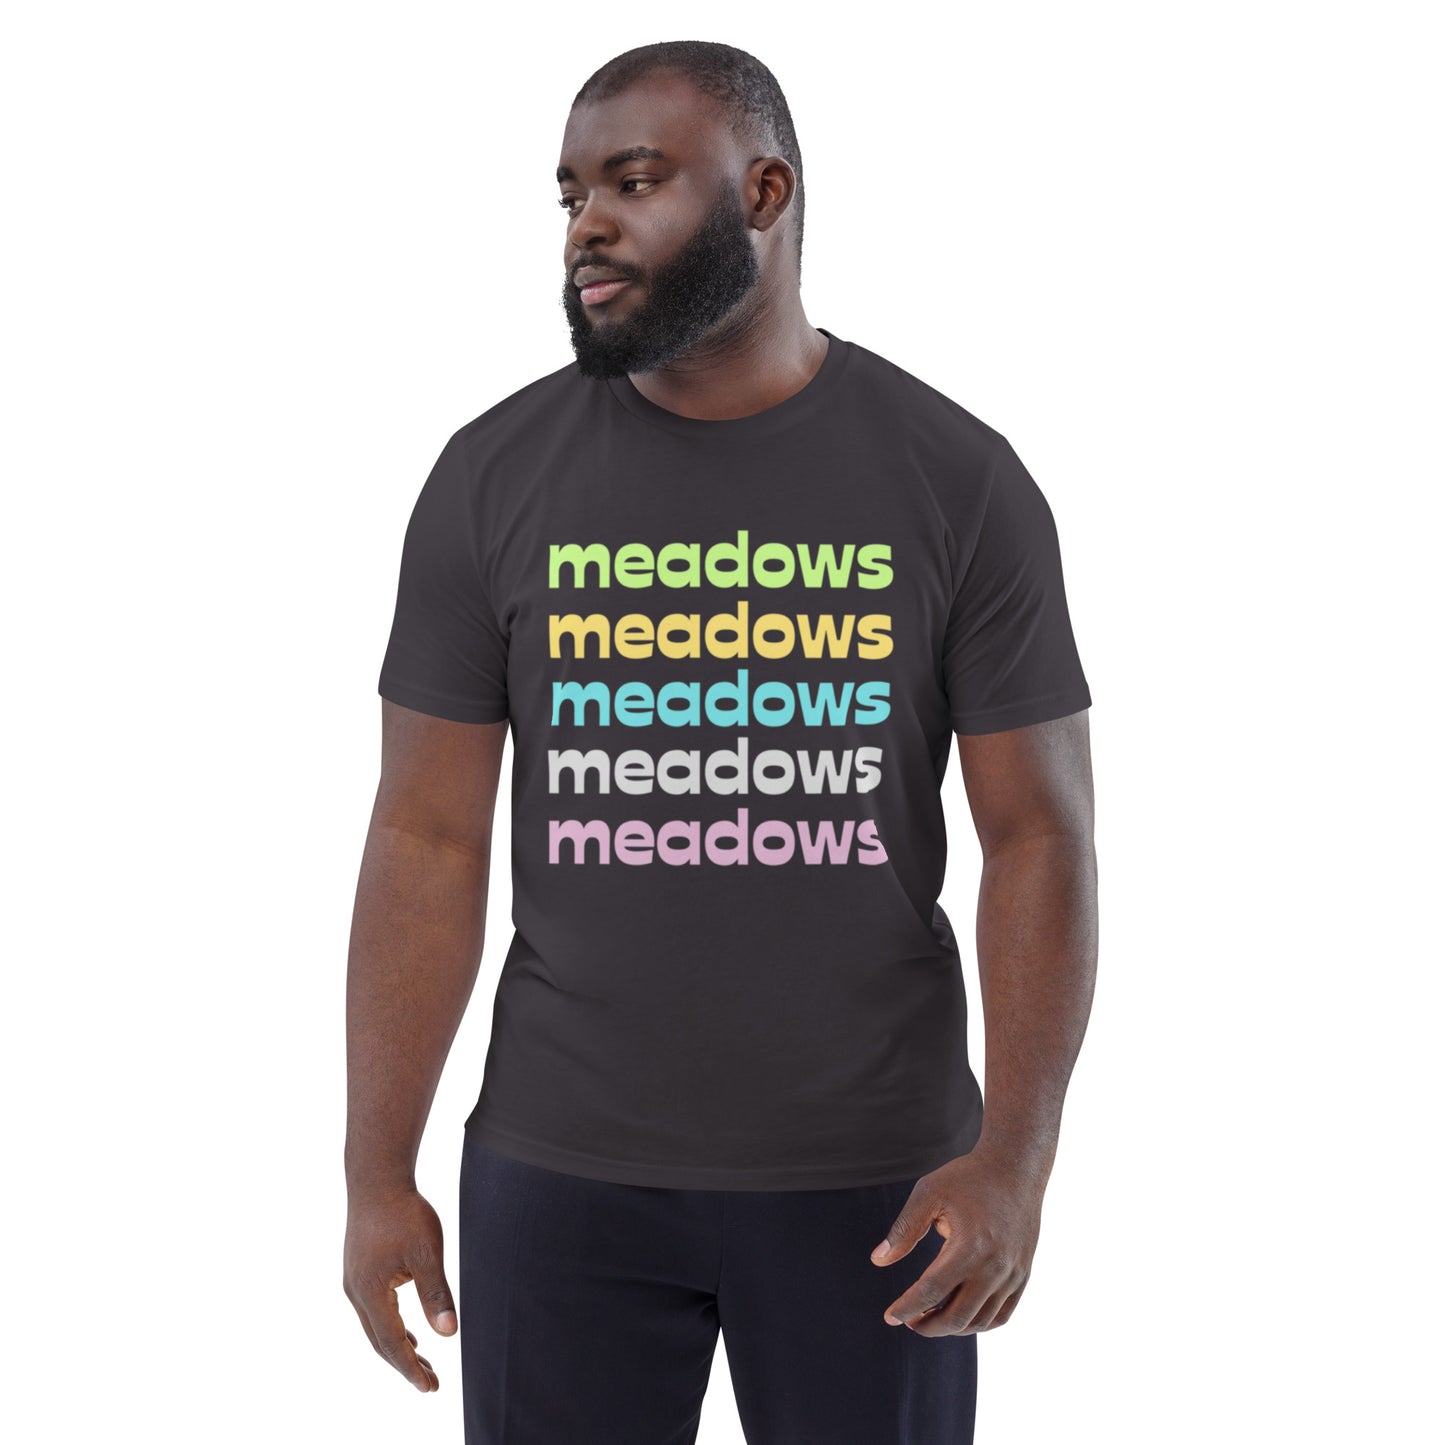 Meadows organic cotton t-shirt